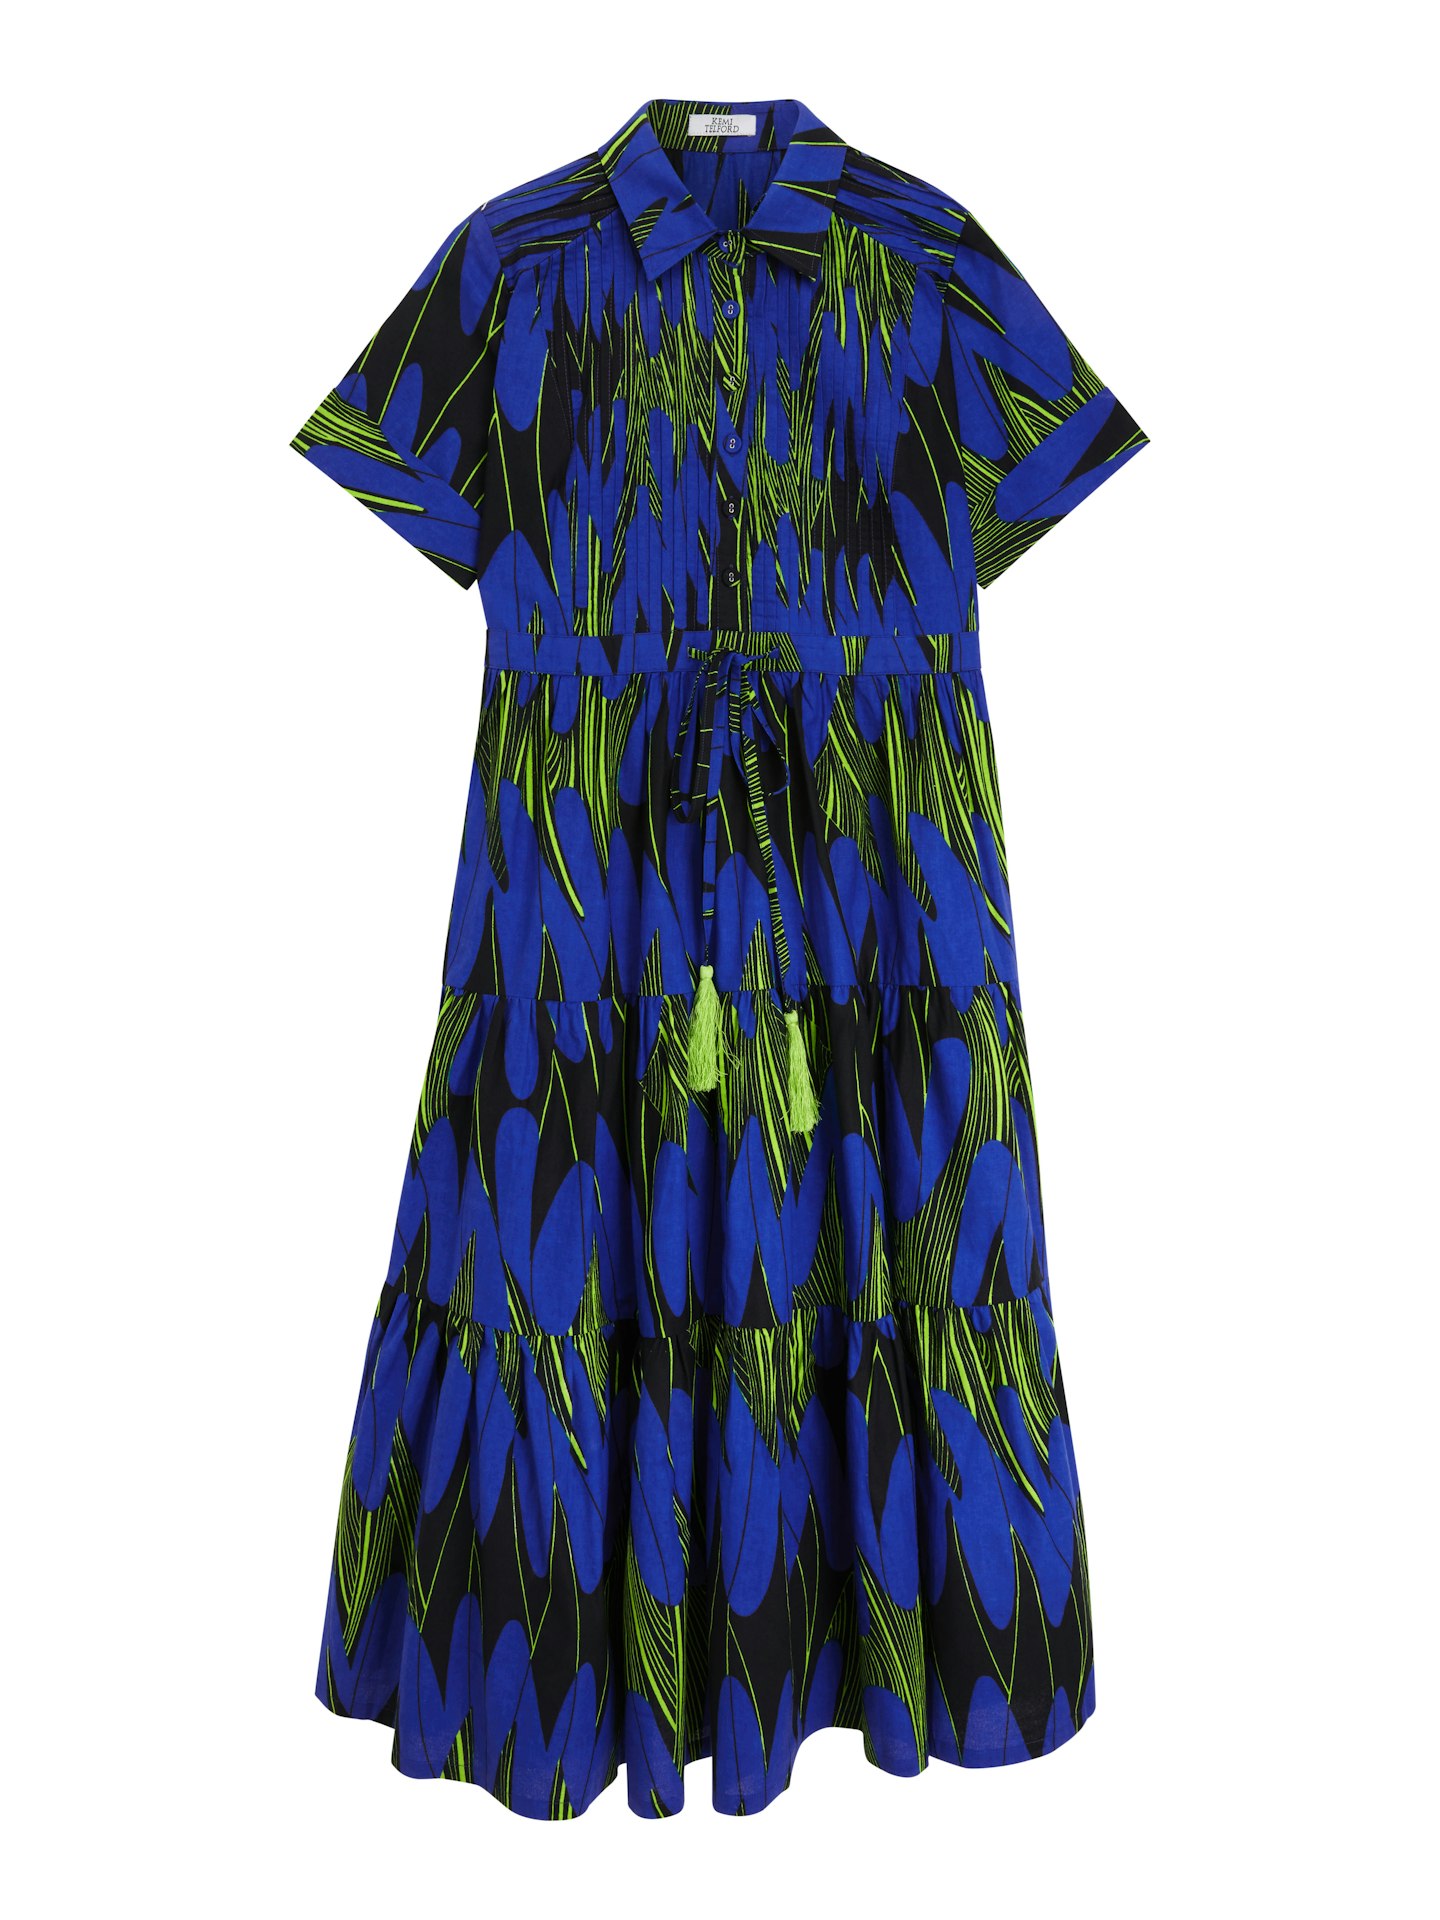 Kemi Telford, Abstract Print Pintuck Dress, £150